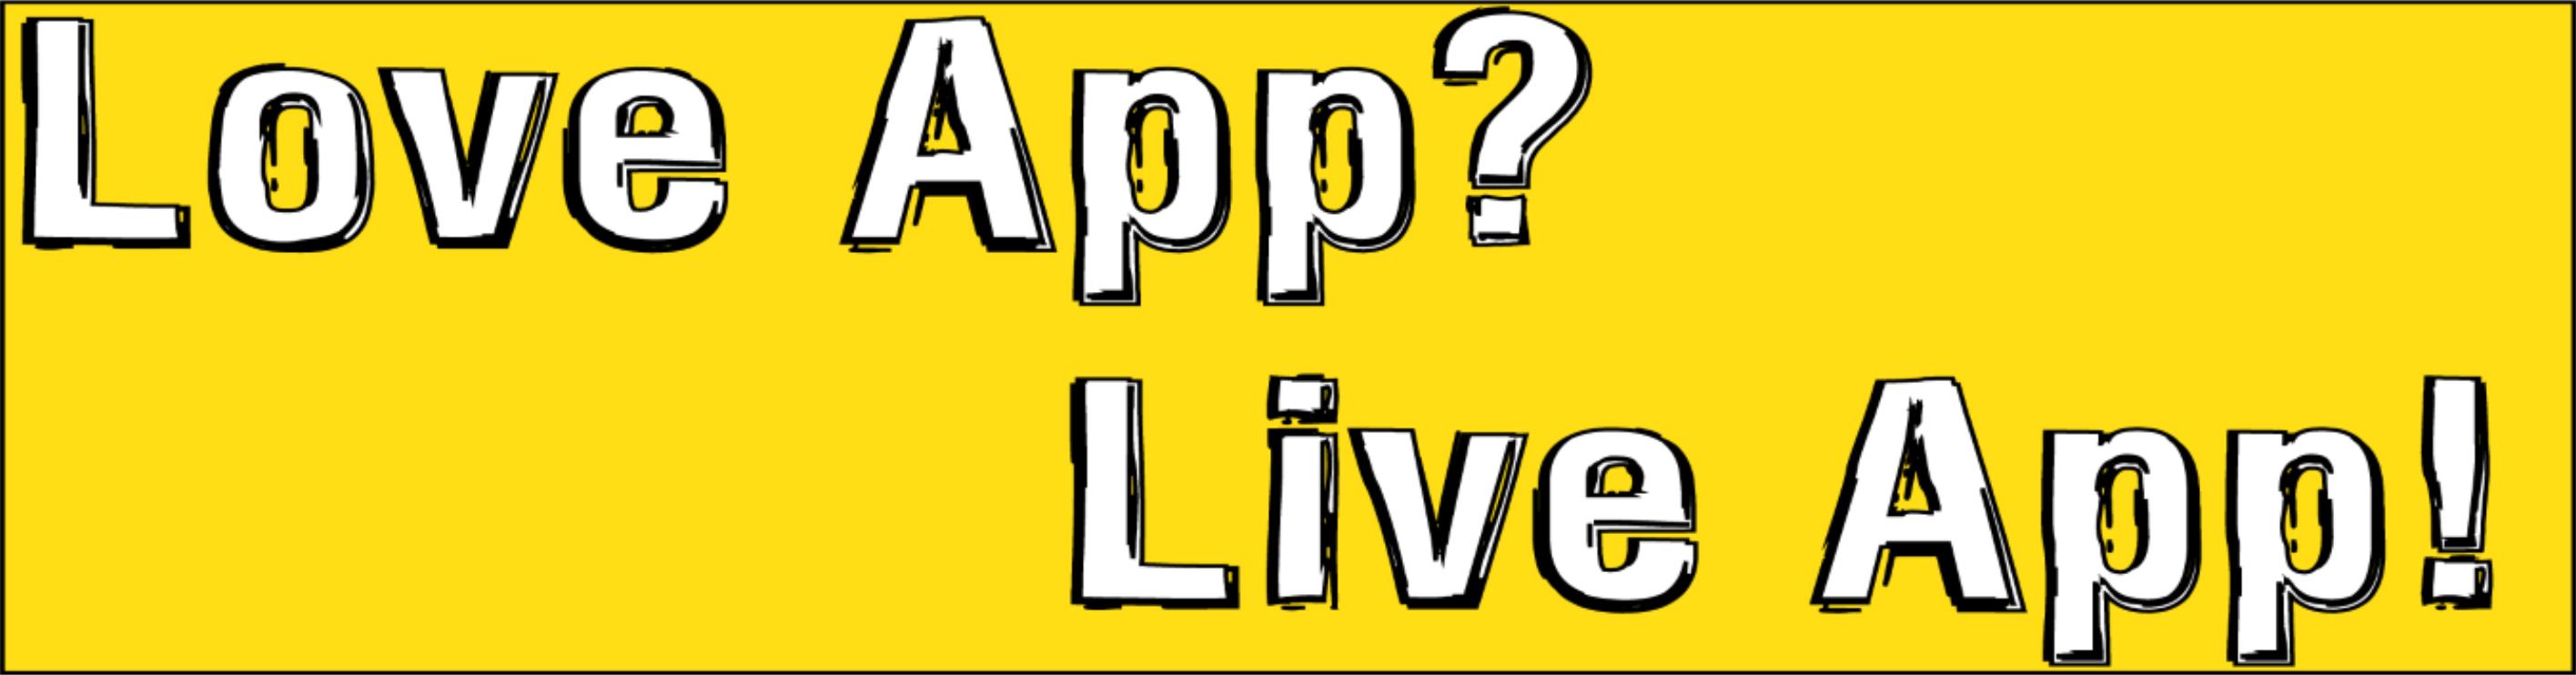 Love App Live App logo